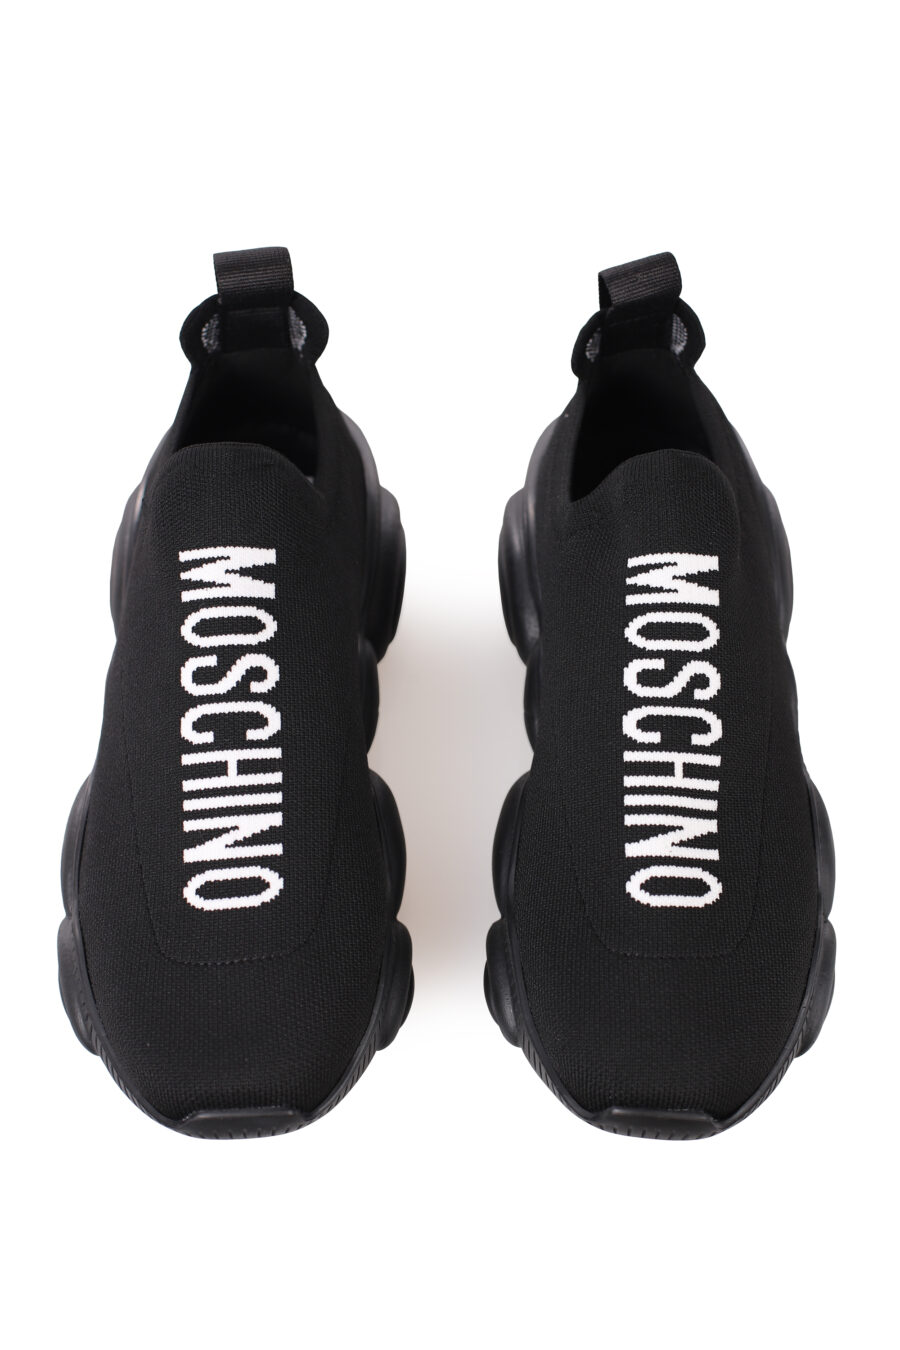 Zapatillas elásticas negras con logo blanco - IMG 0328